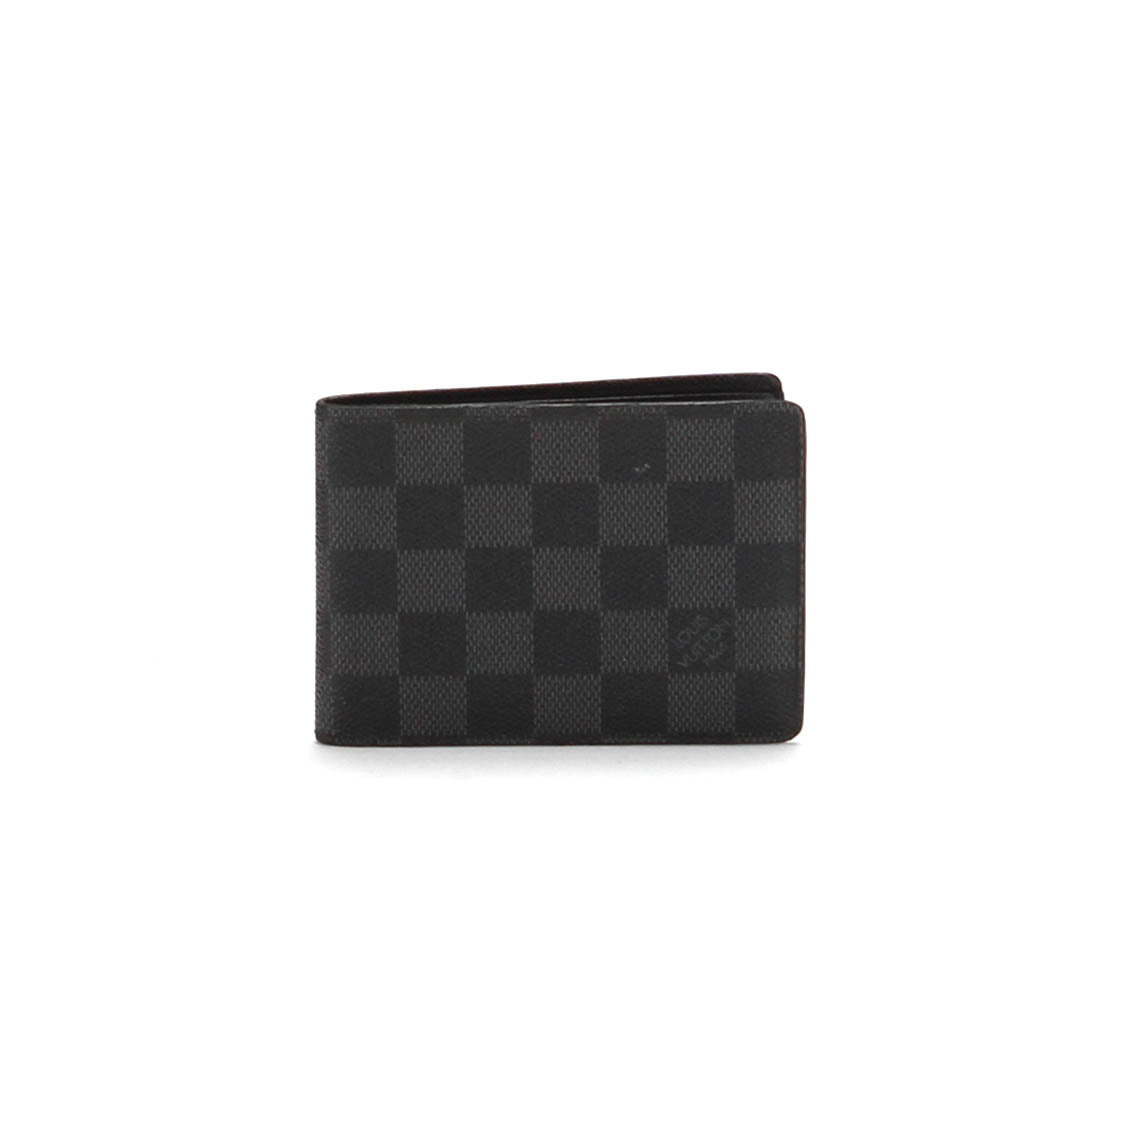 Louis Vuitton N62663 Multiple Wallet, Grey, One Size